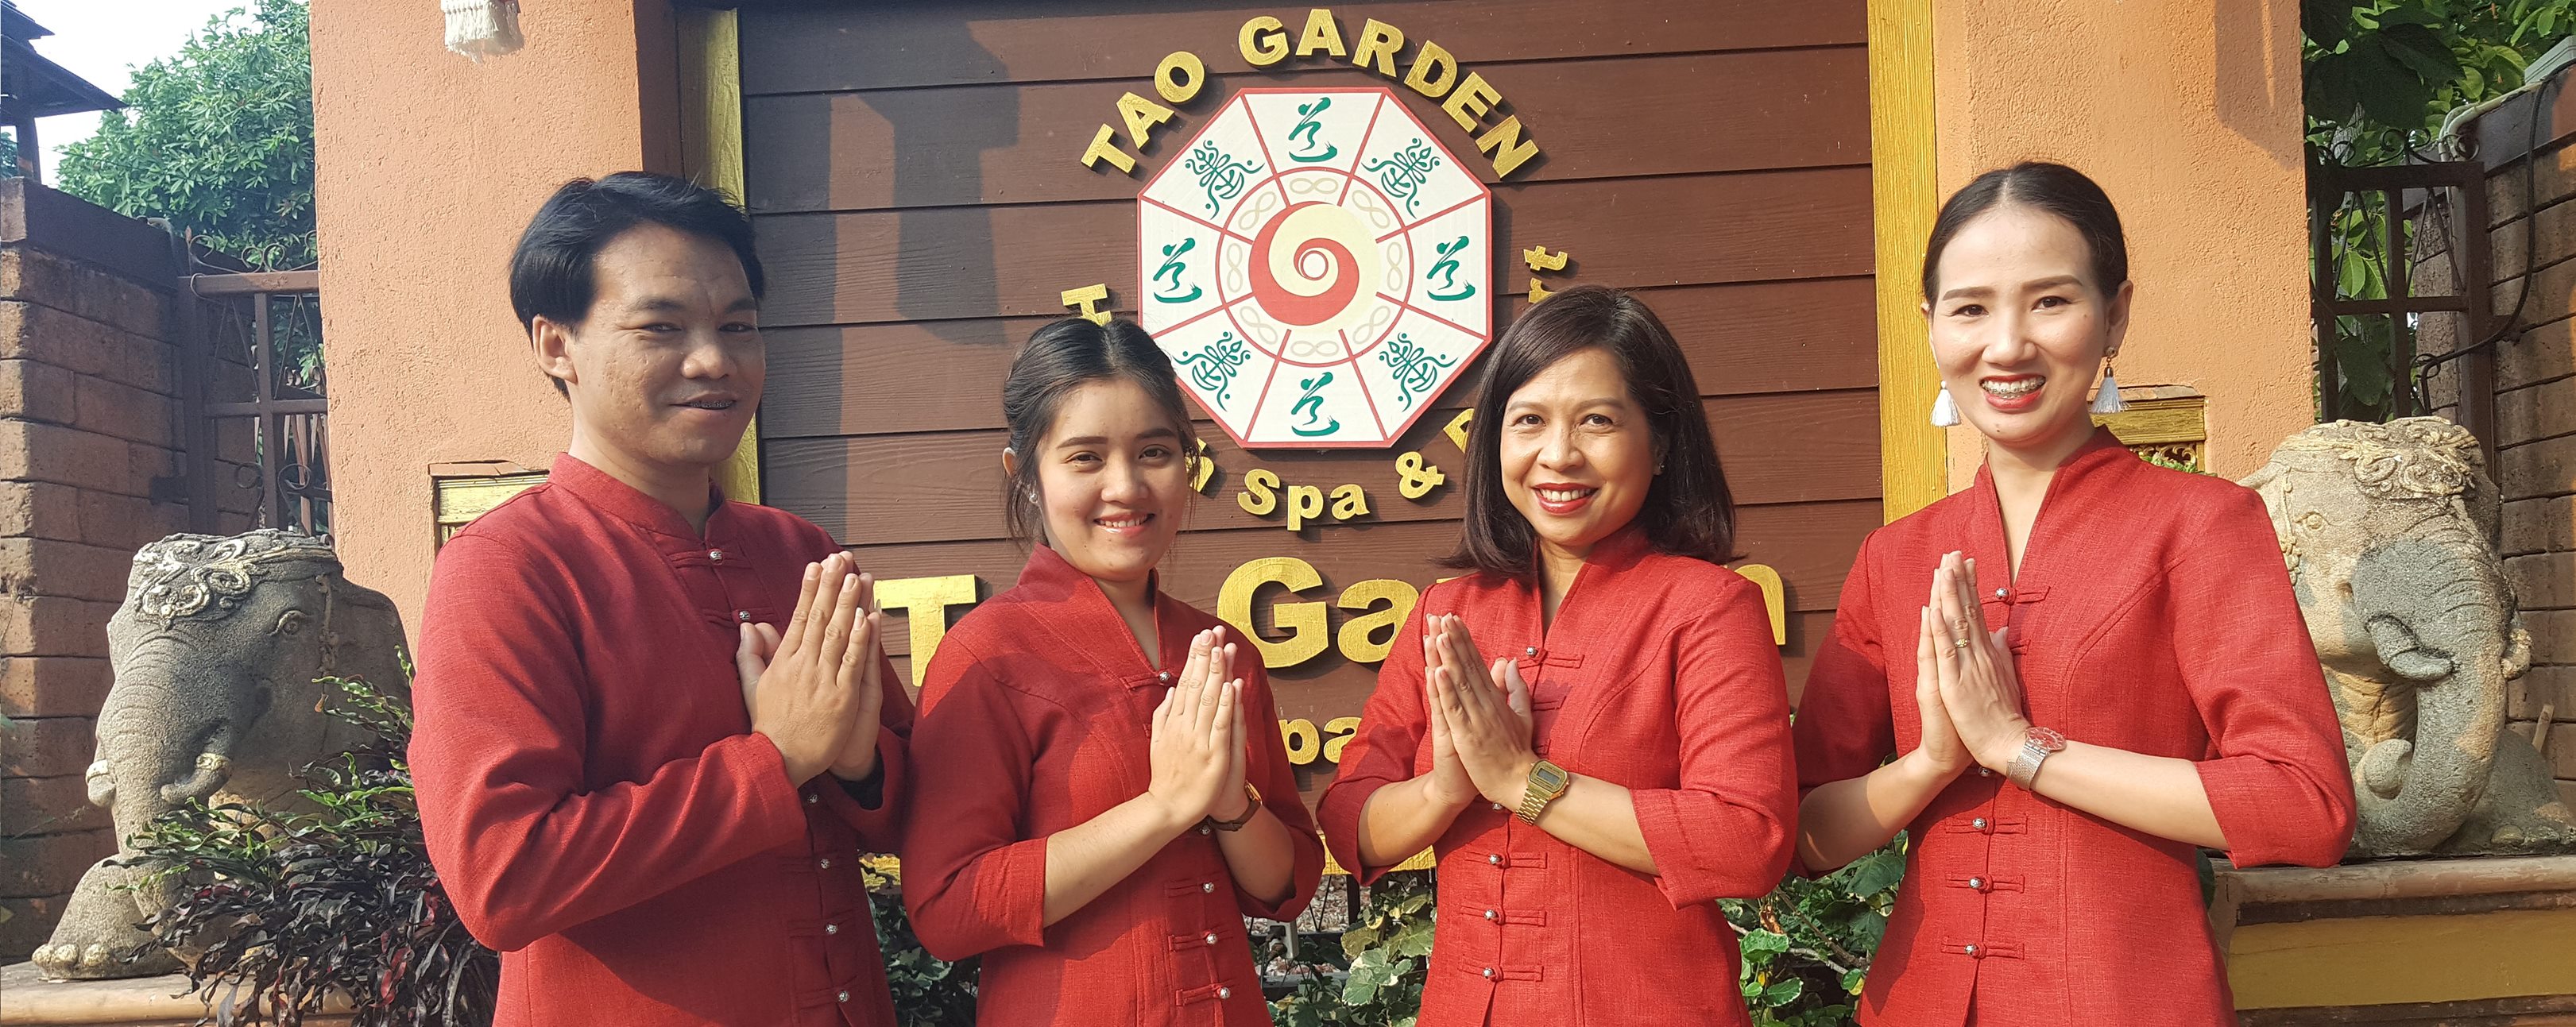 Tao Garden Health Spa And Resort 